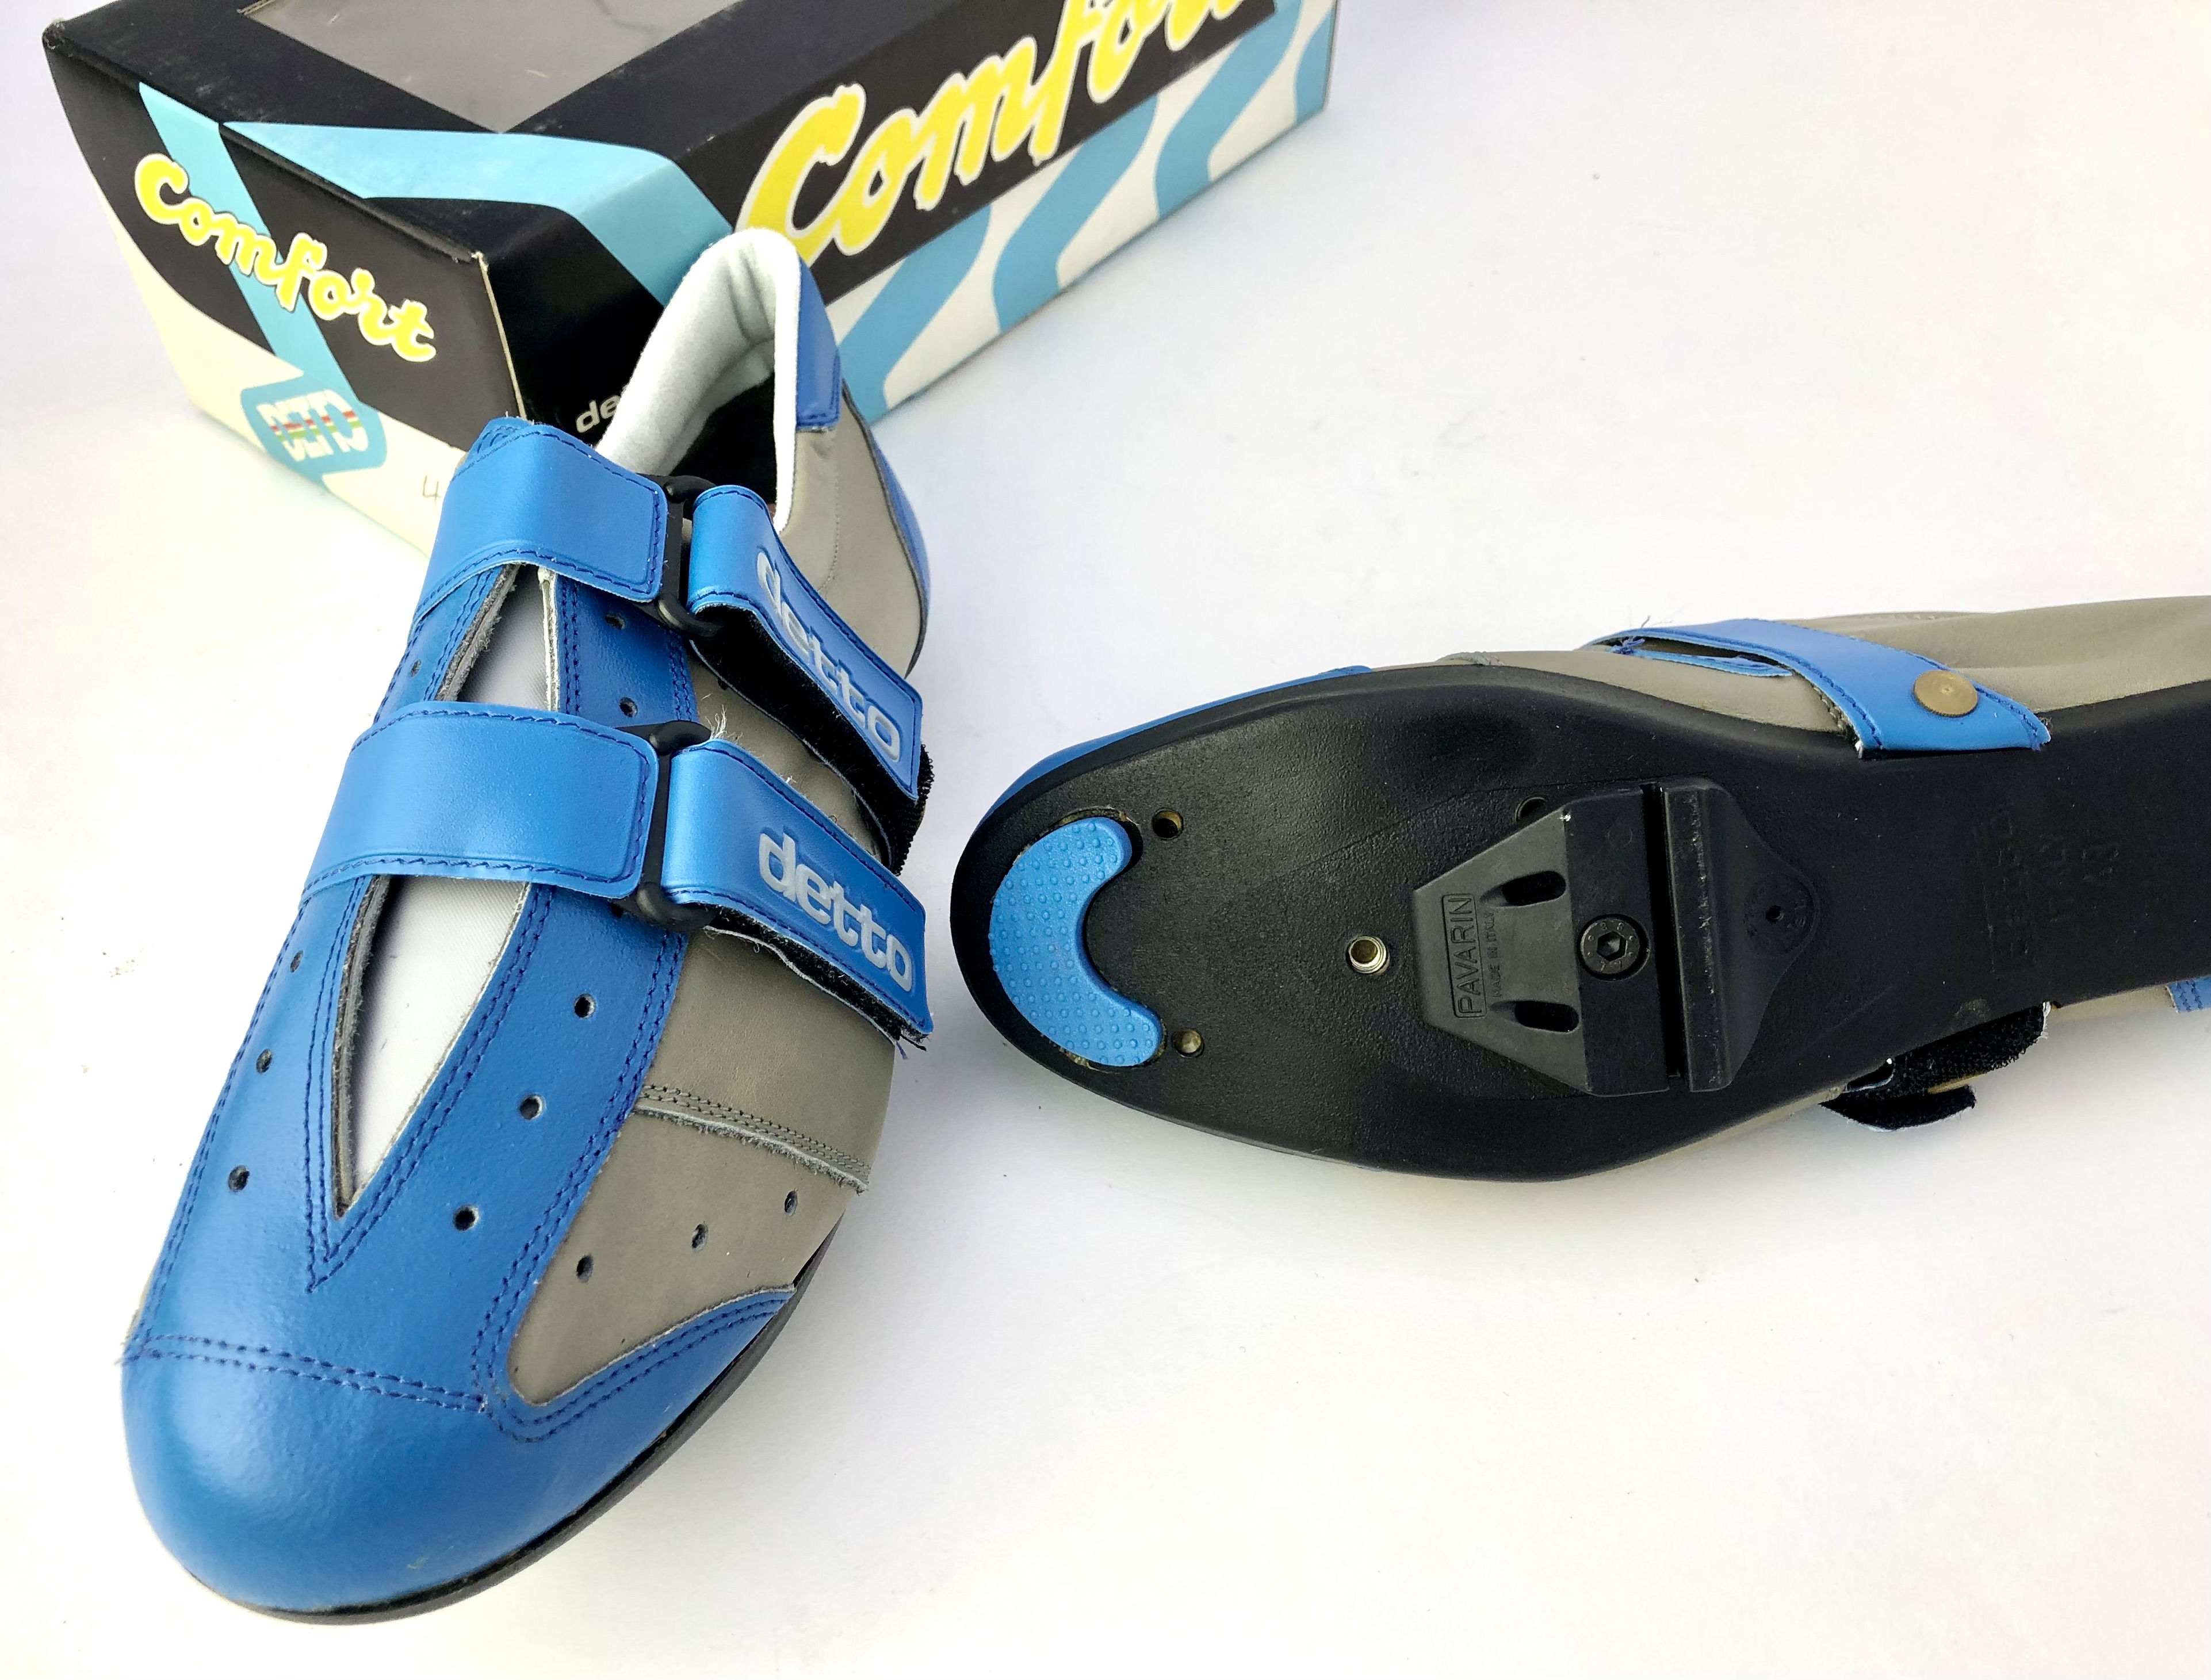 NOS Vintage Detto Pietro Mod. 230 Comfort Blue Cycling Shoes Size 41